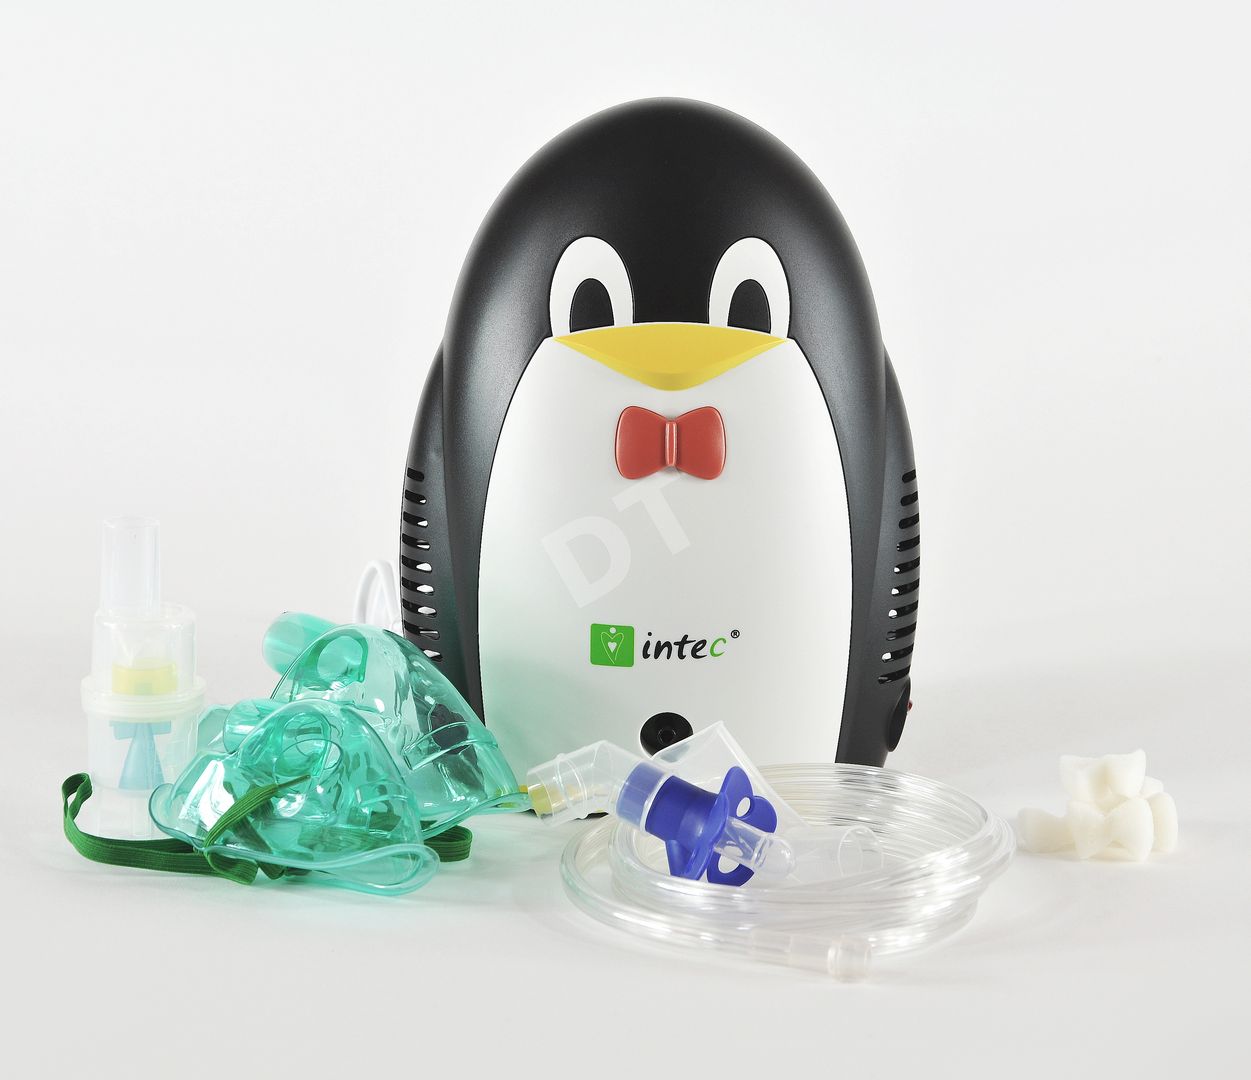  Inhalator Intec Medical Pingwin CN-02WF